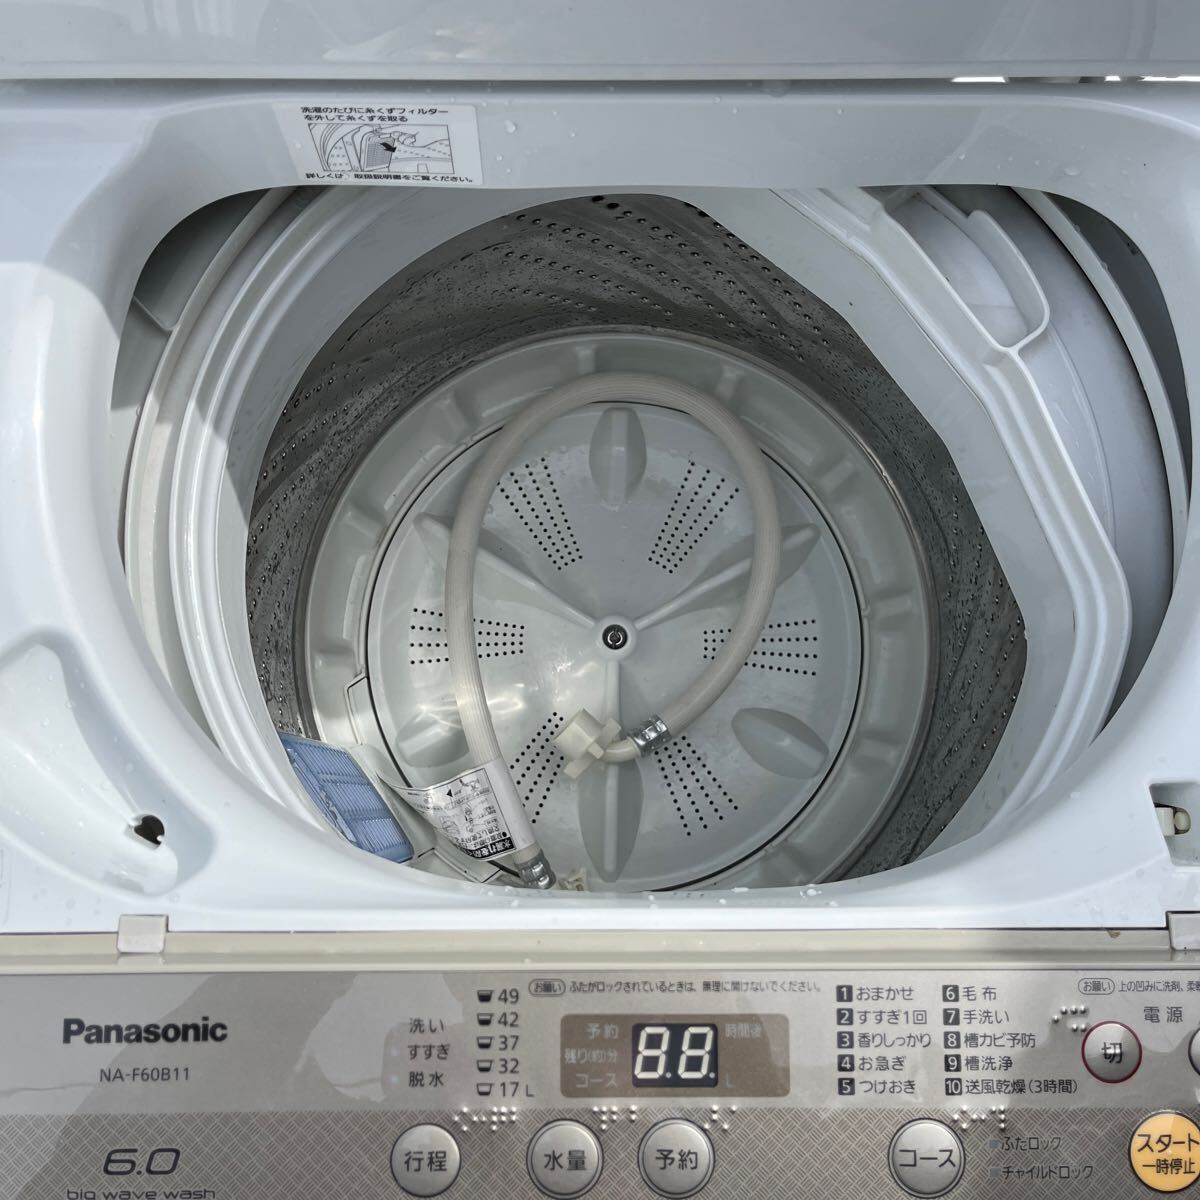 Panasonic 全自動洗濯機 NA-F60B11 6kg【H88cm W 57cm D 57cm】2017年製_画像5